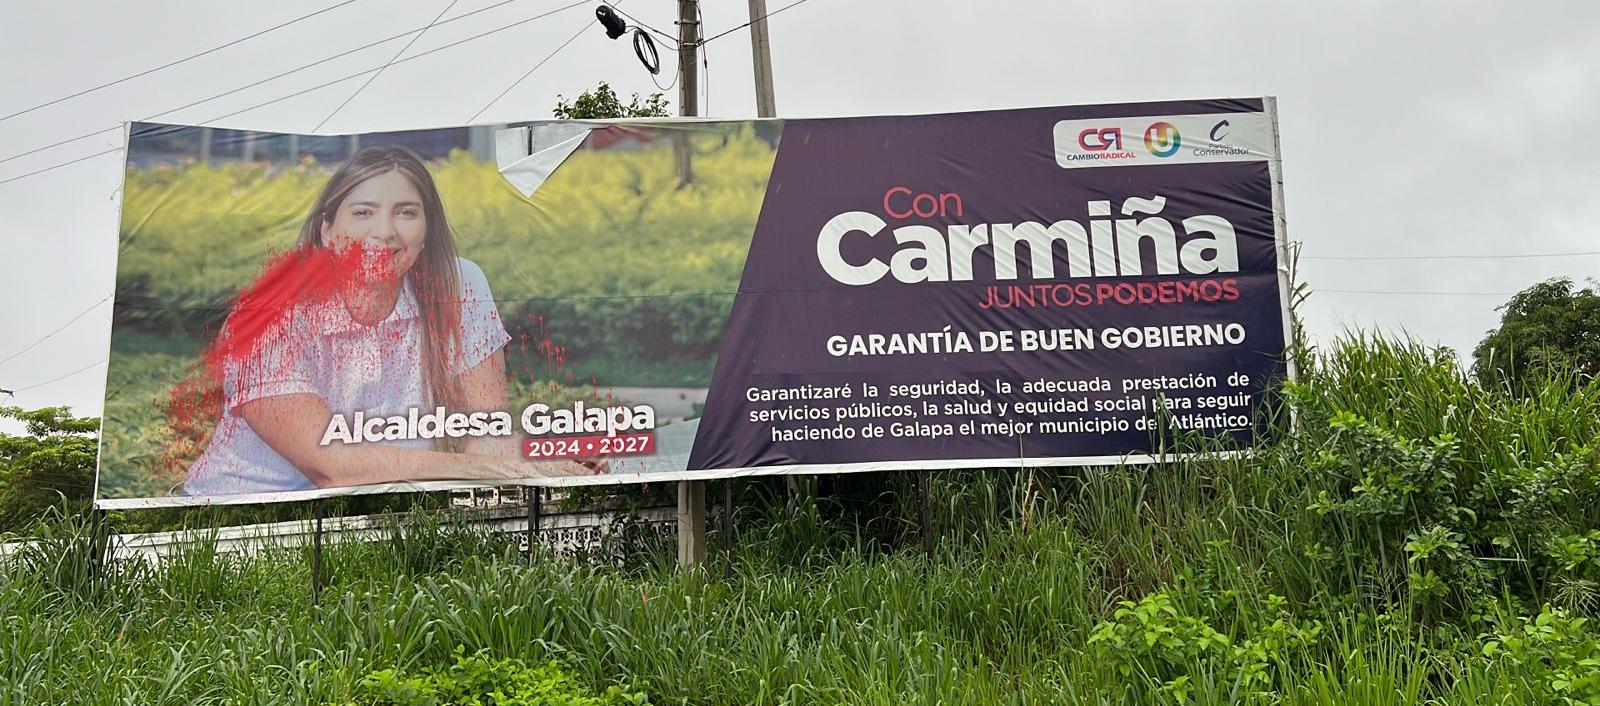 Valla vandaliza de Carmiña Navarro.